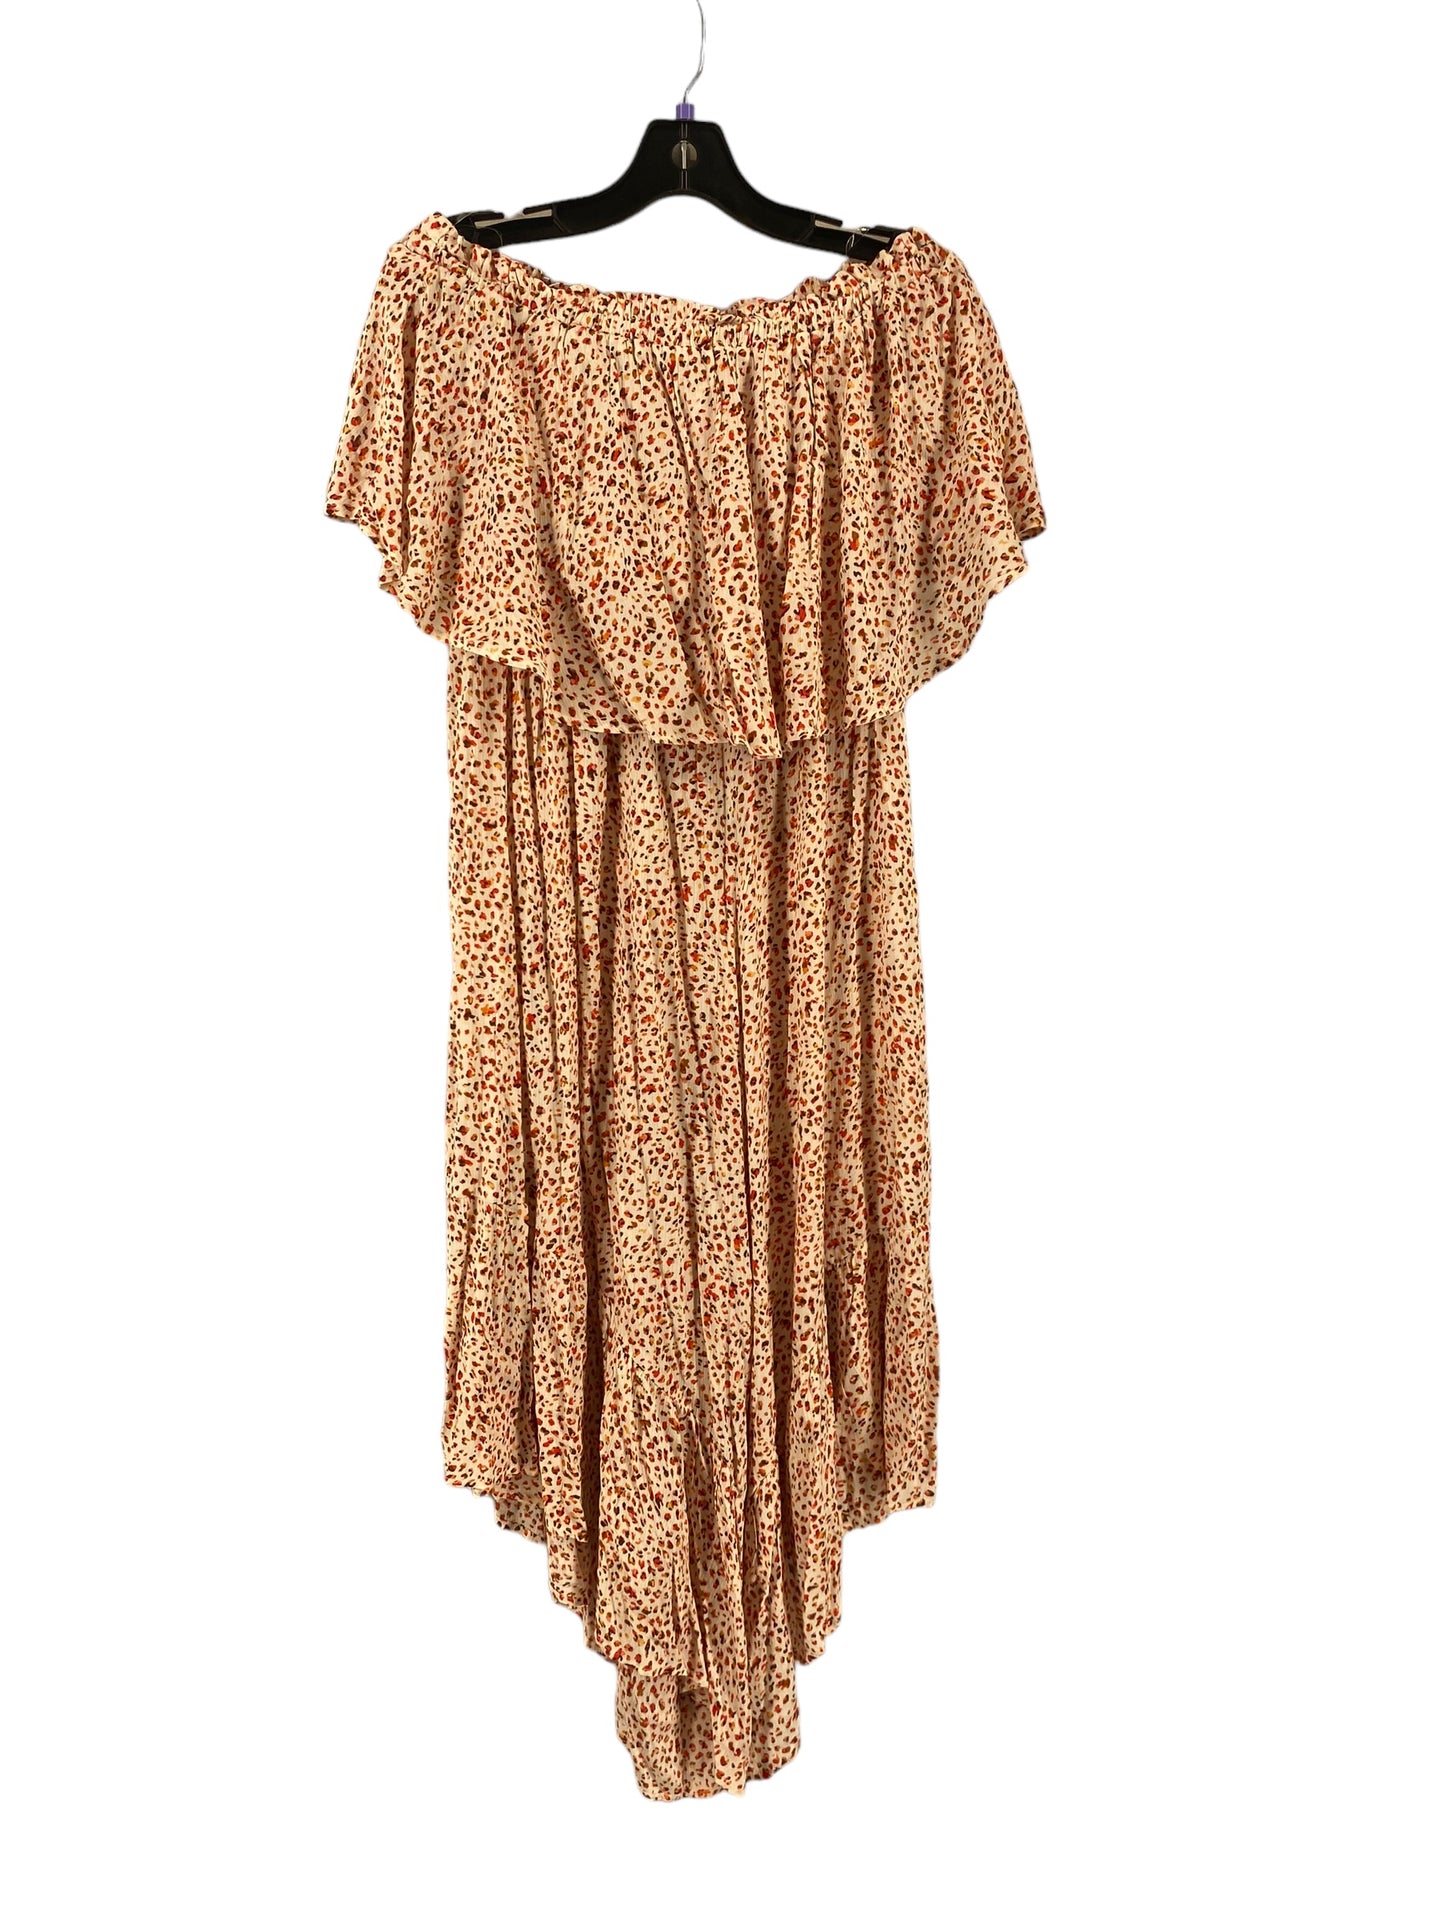 Dress Casual Midi By Kori America  Size: S